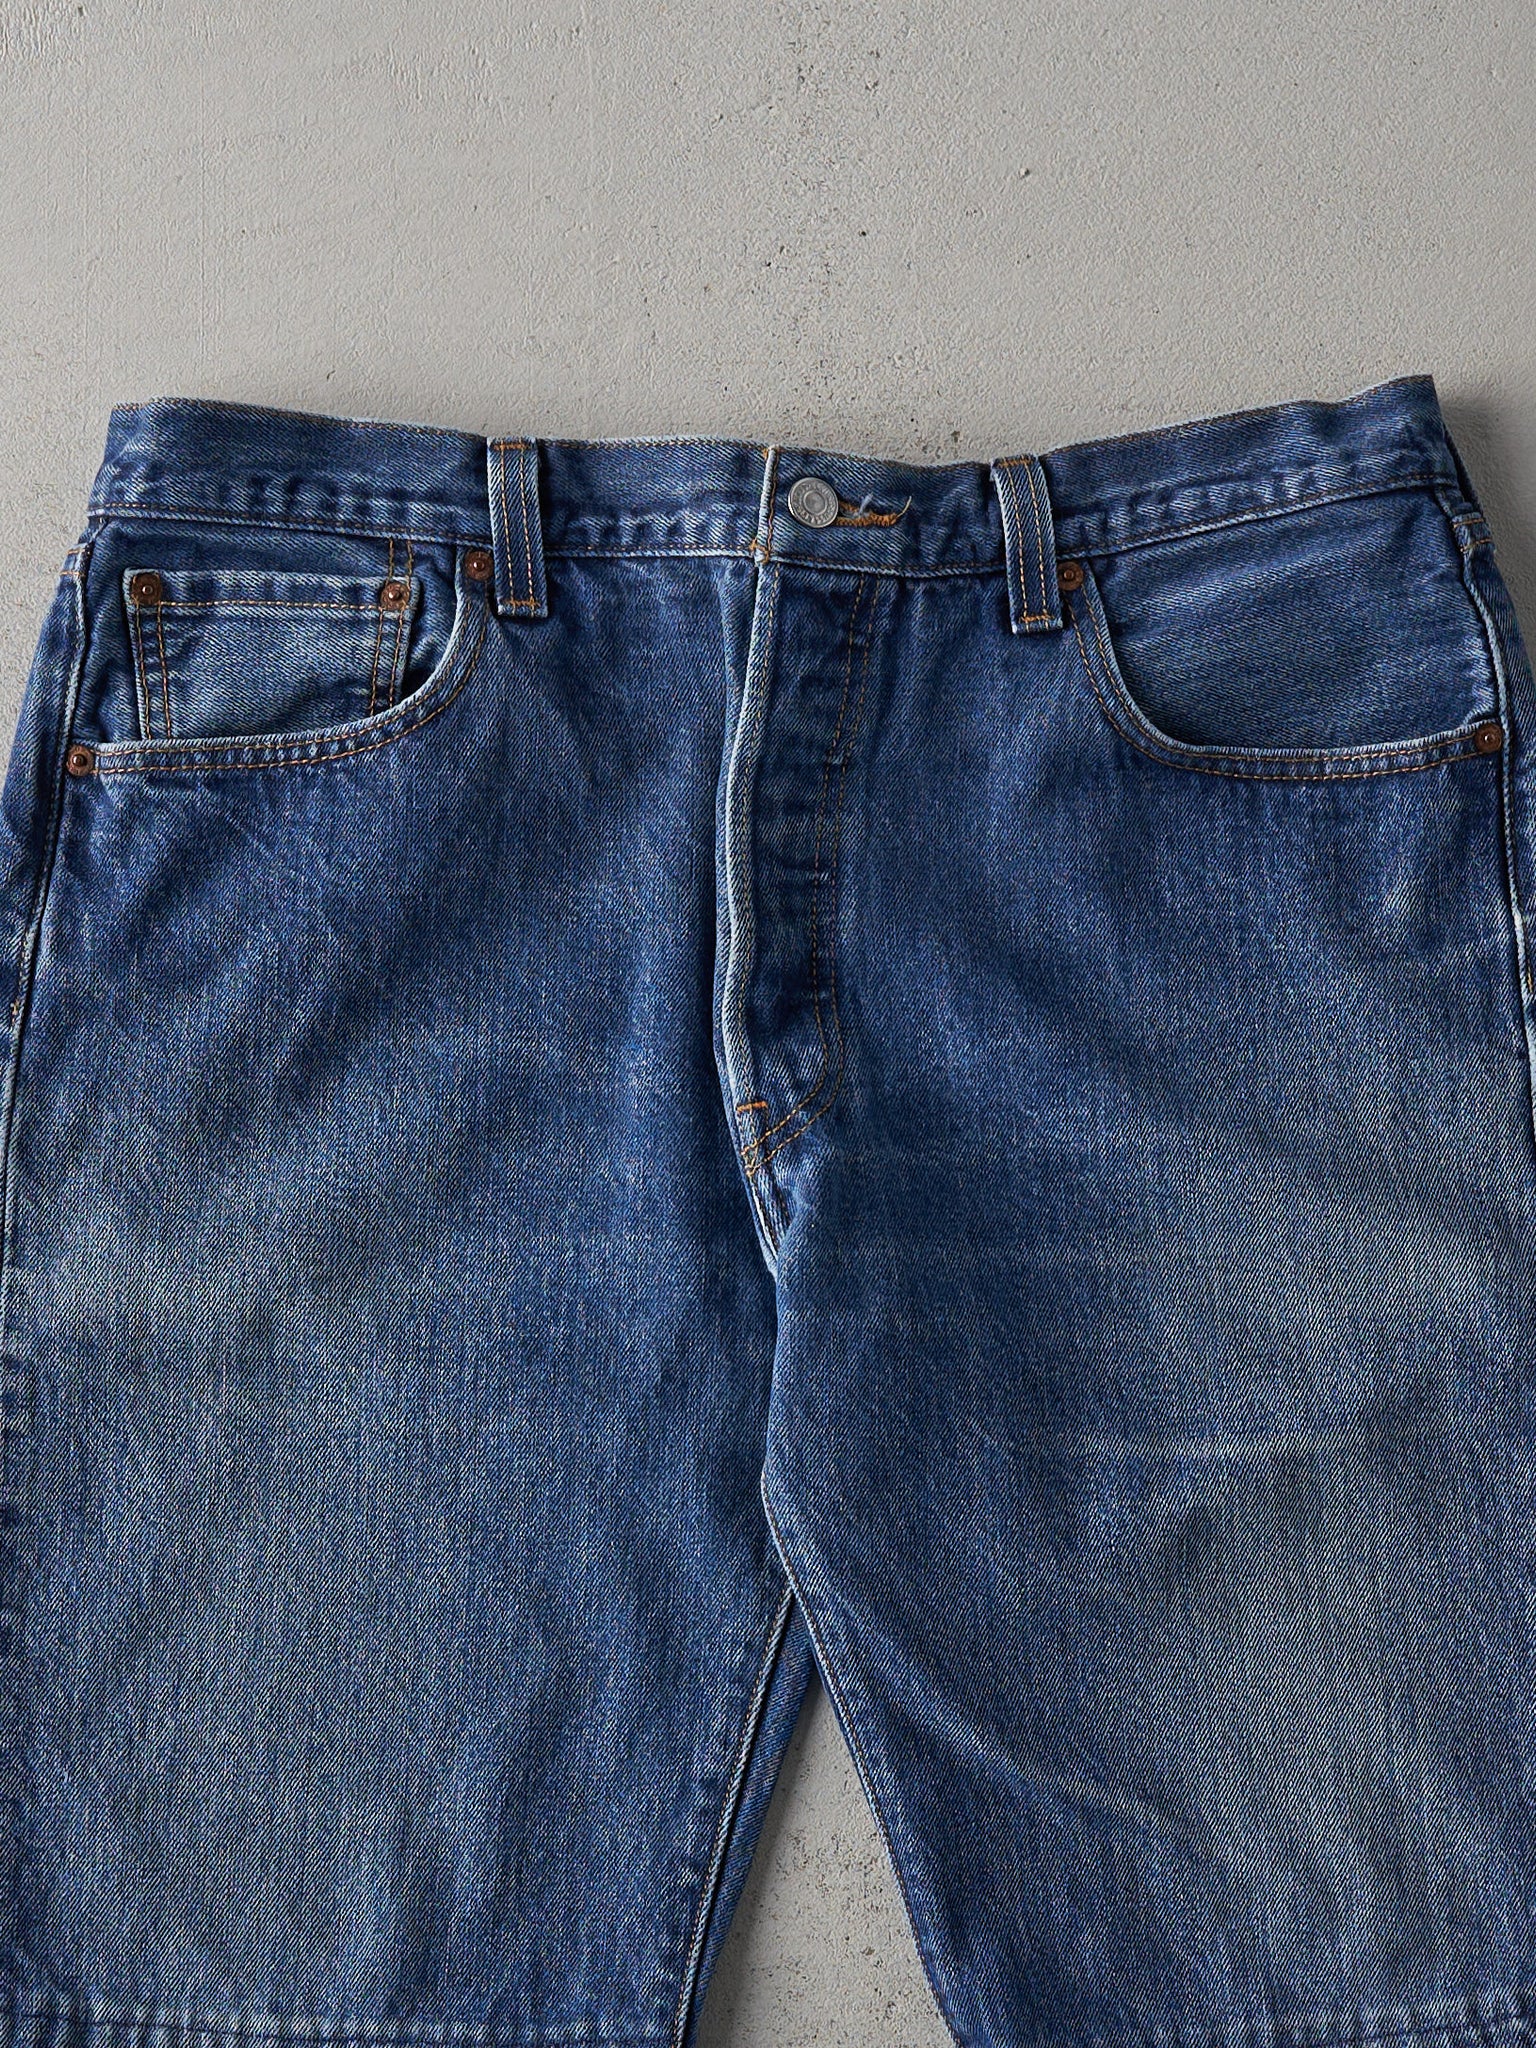 Vintage Y2K Mid Wash Levi's 501s Jean Shorts (36x10)